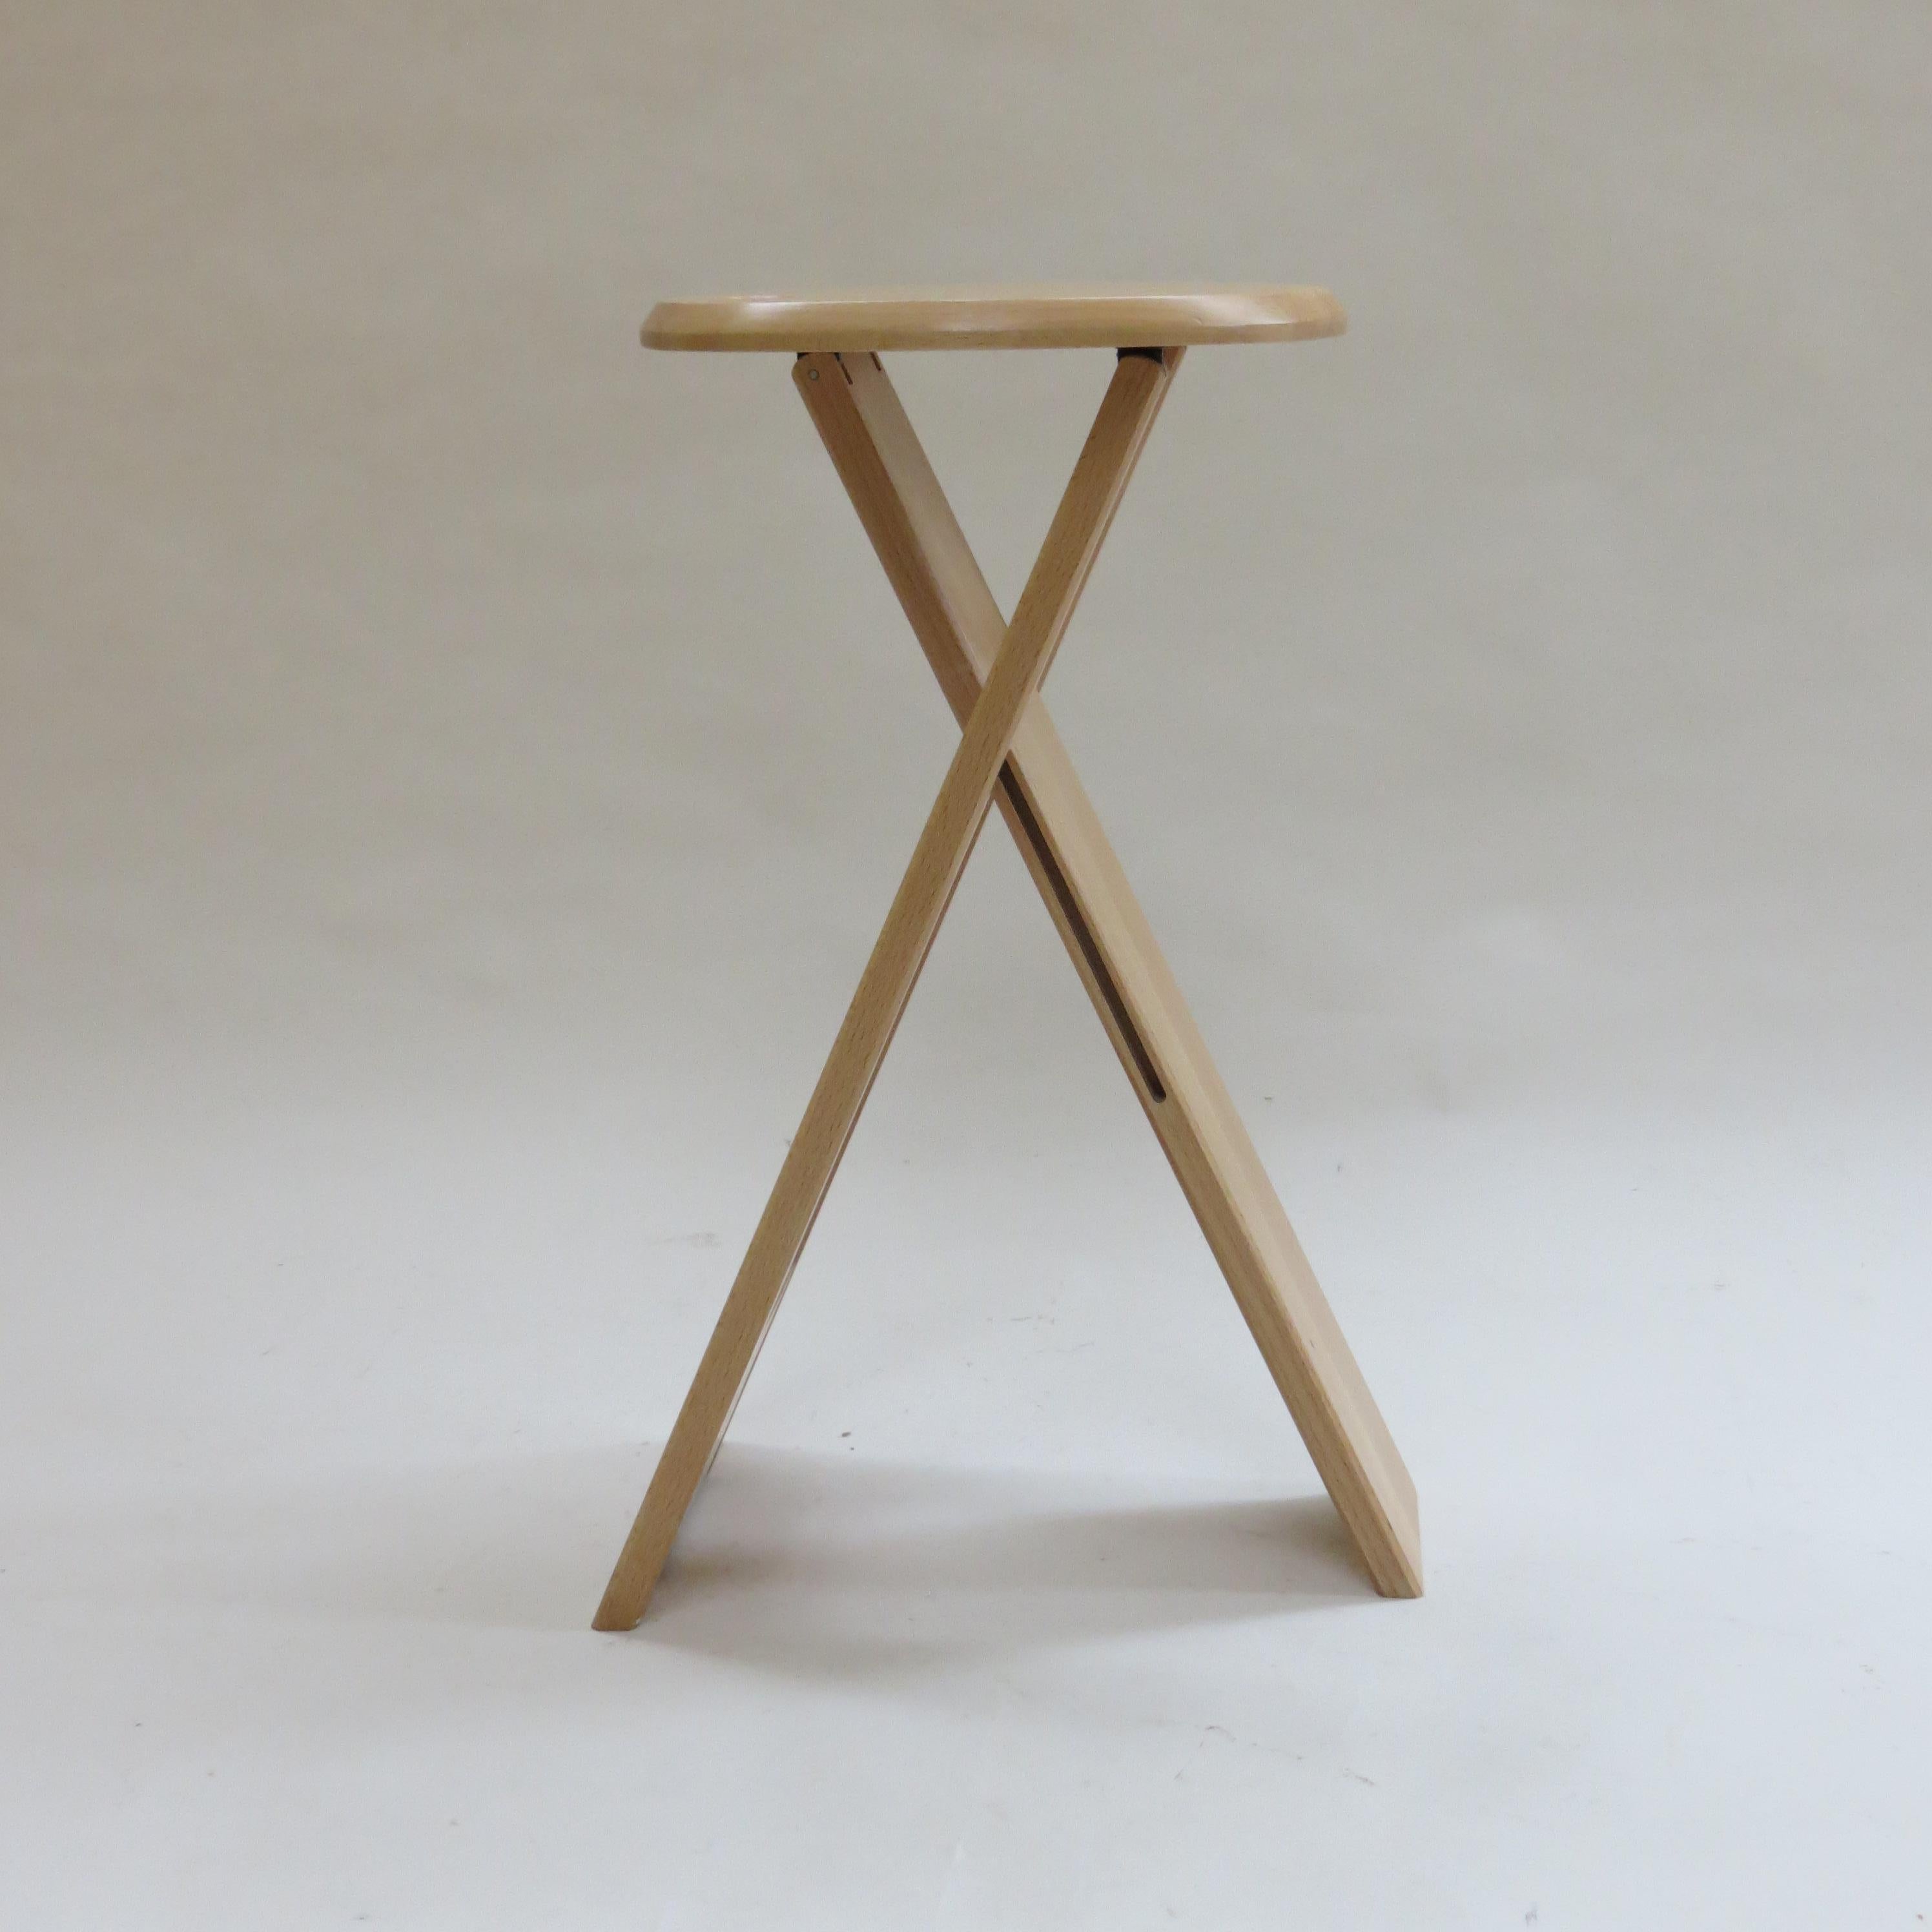 adrian reed stool